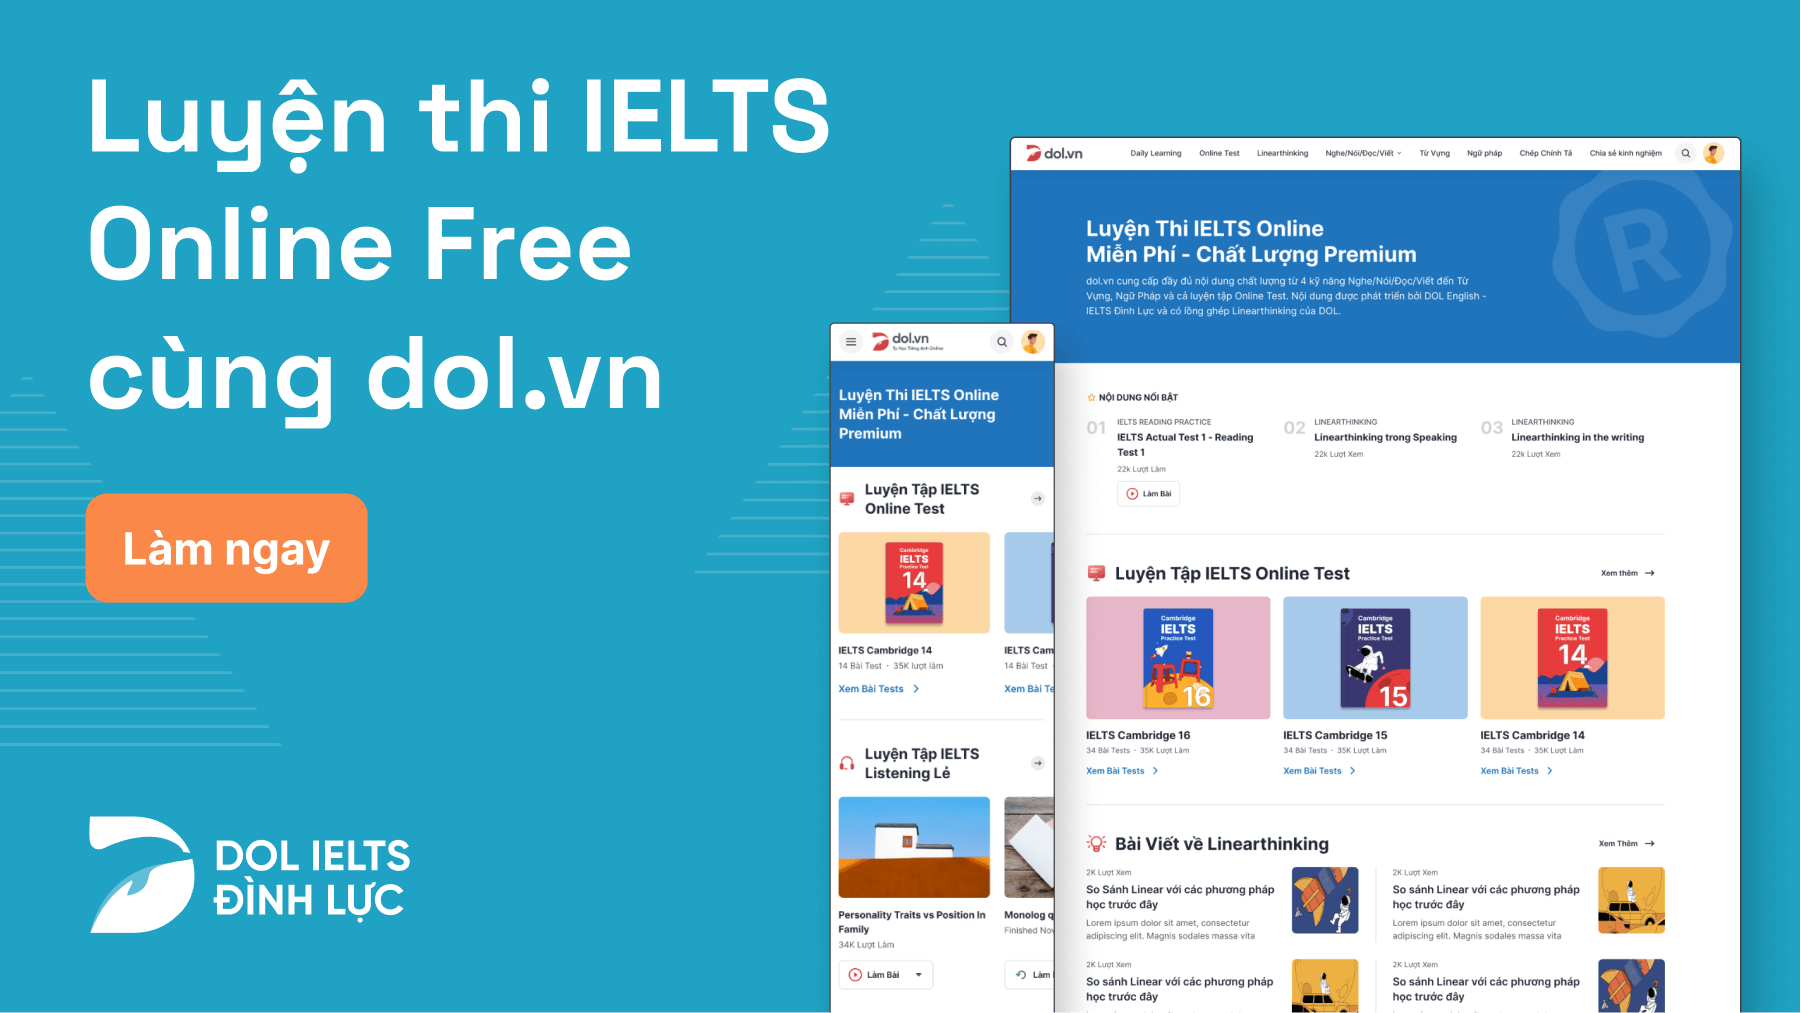 Luyện thi IELTS Online dol.vn| Tự học IELTS Online miễn phí từ A-Z